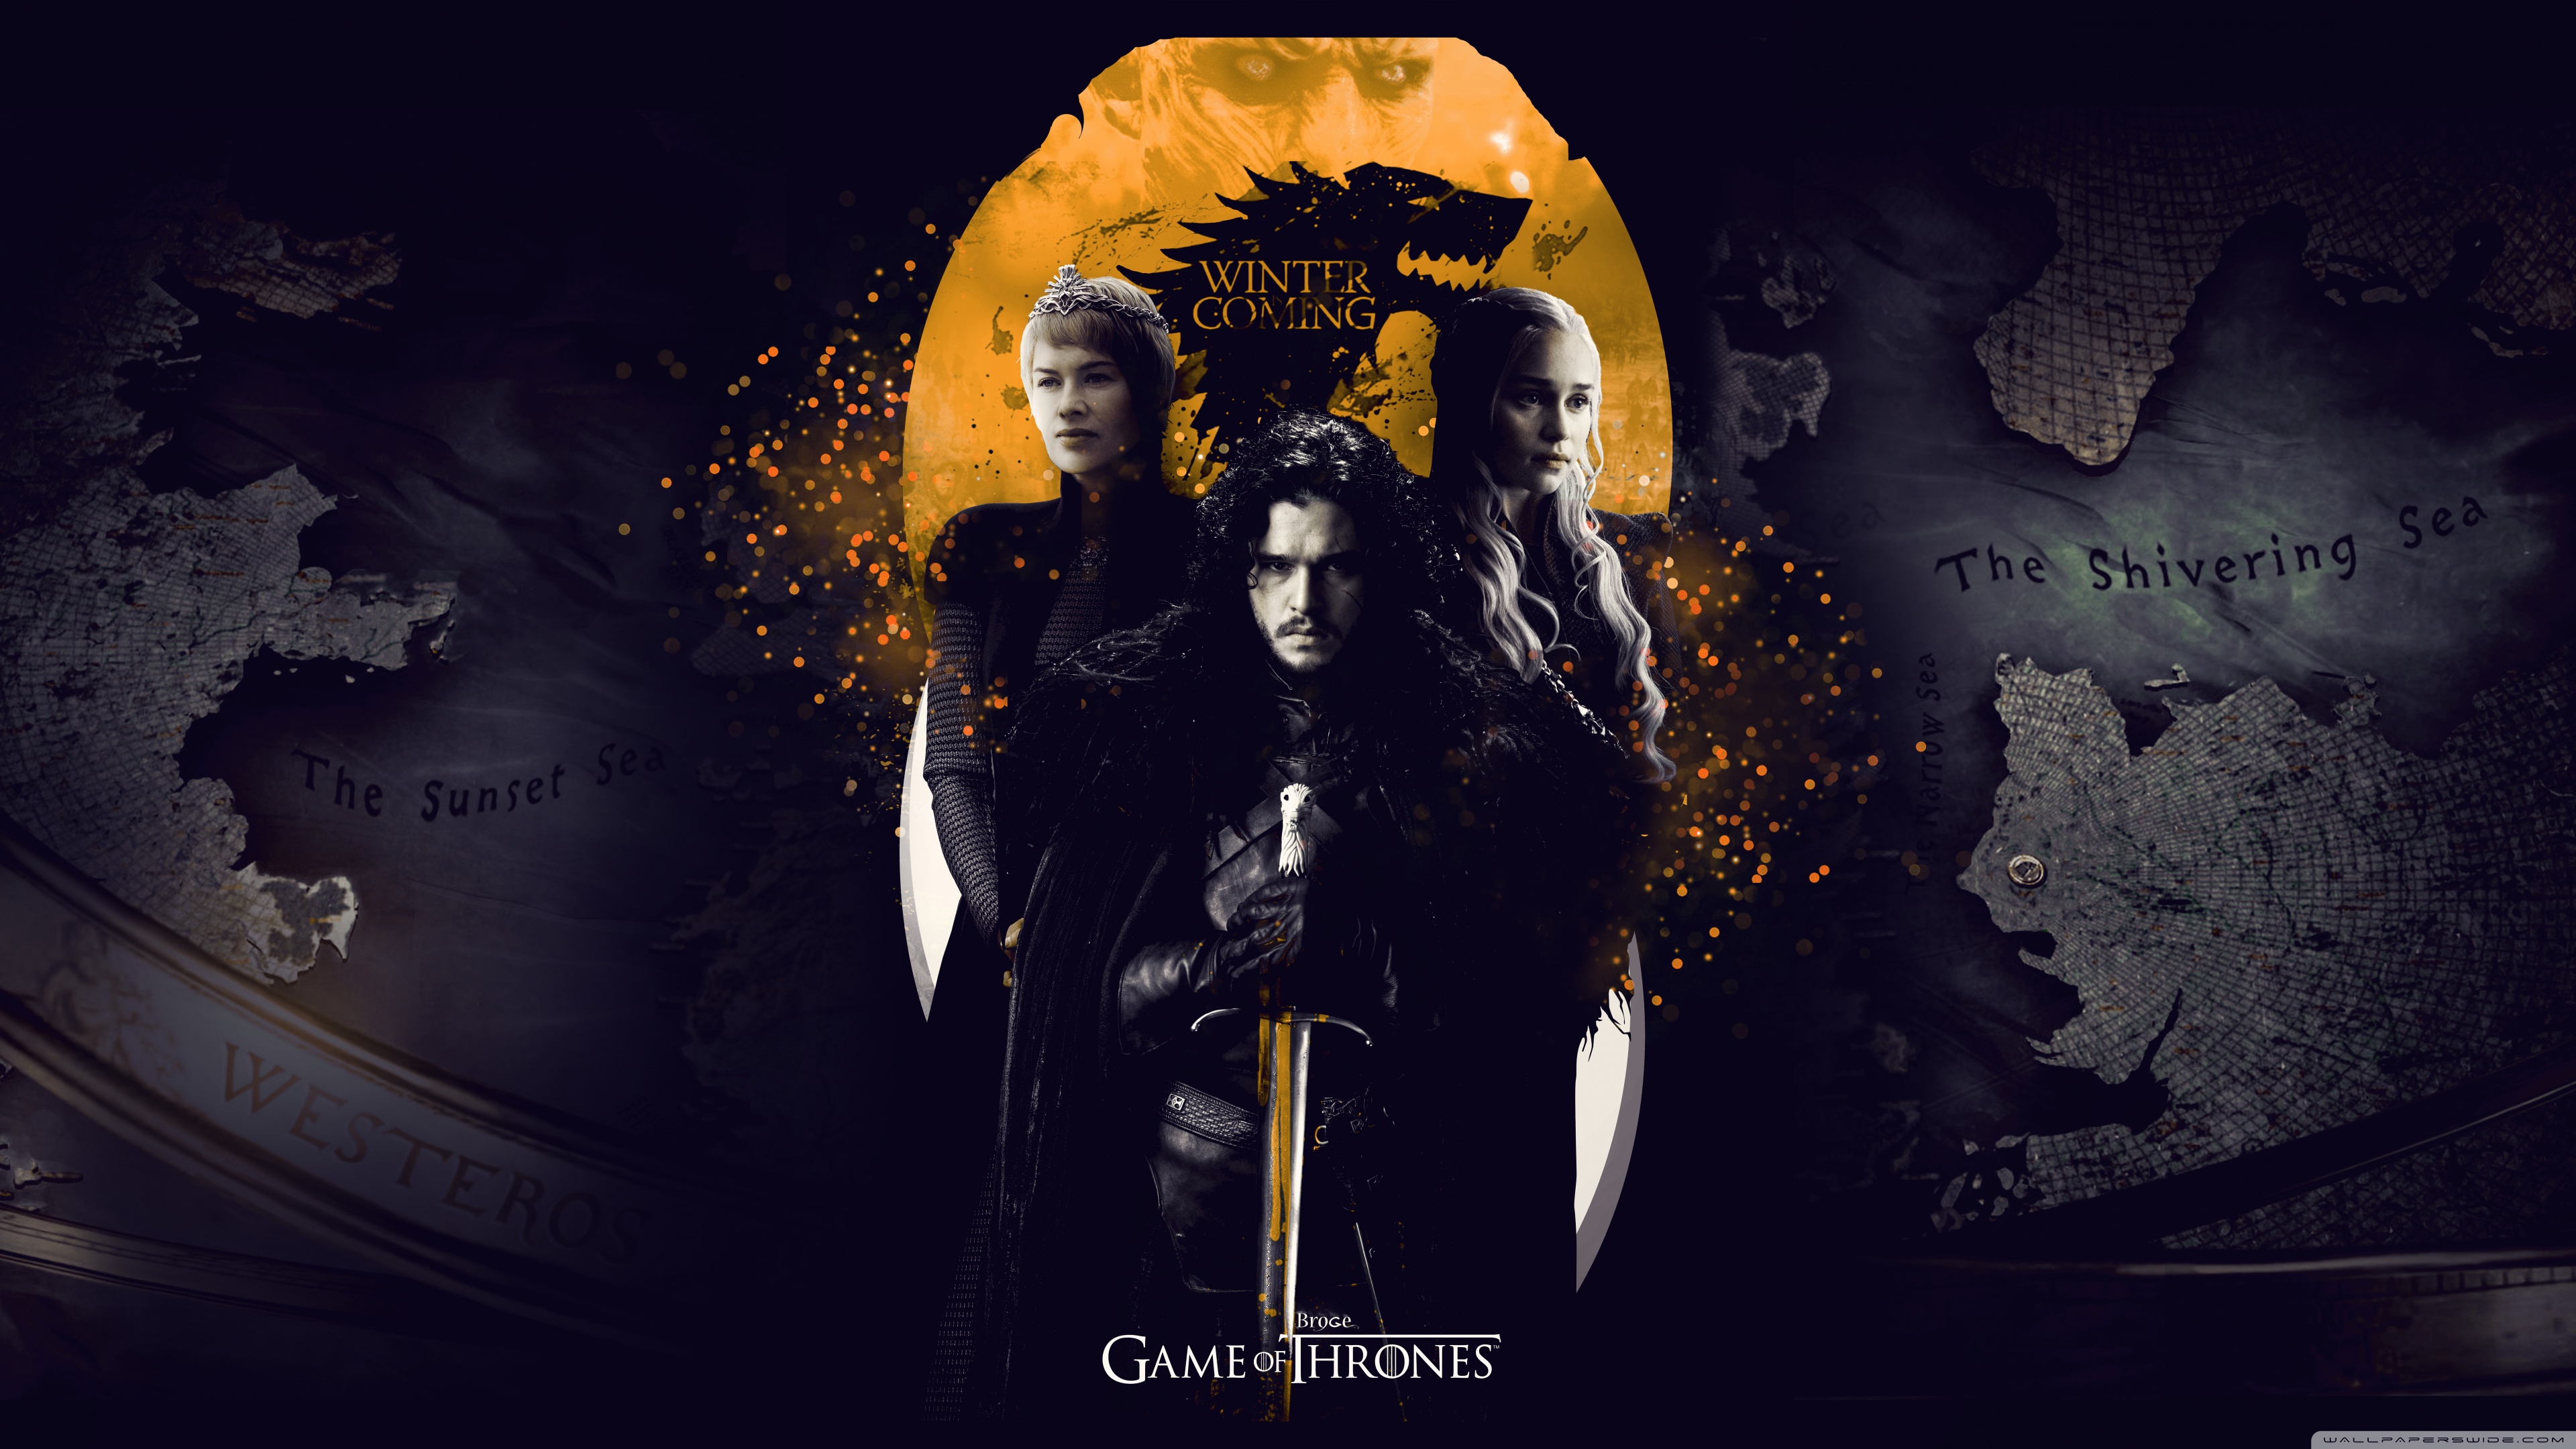 Free download Game of Thrones 4K HD Desktop Wallpaper for 4K Ultra HD